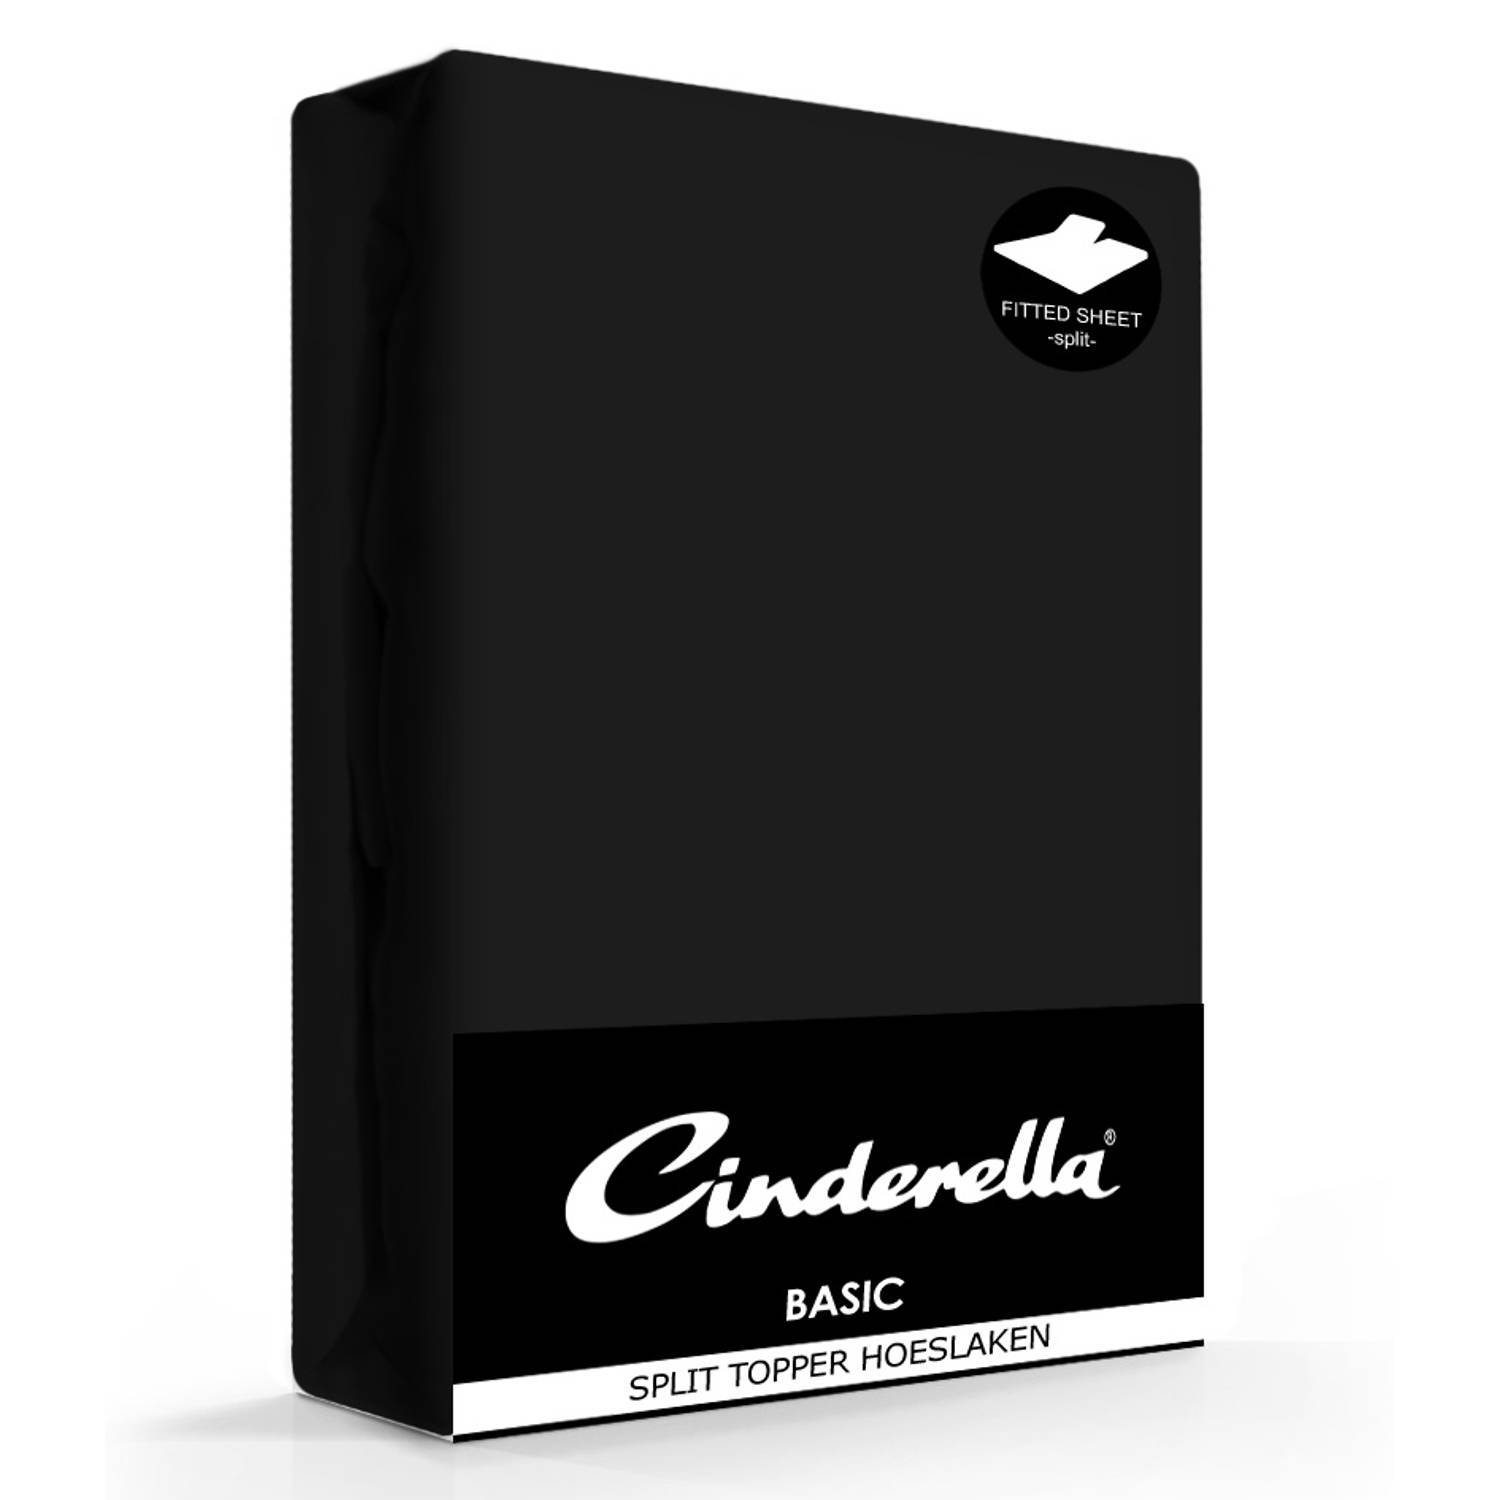 Cinderella Splittopper Hoeslaken Basic Percaline Black-180 x 200 cm